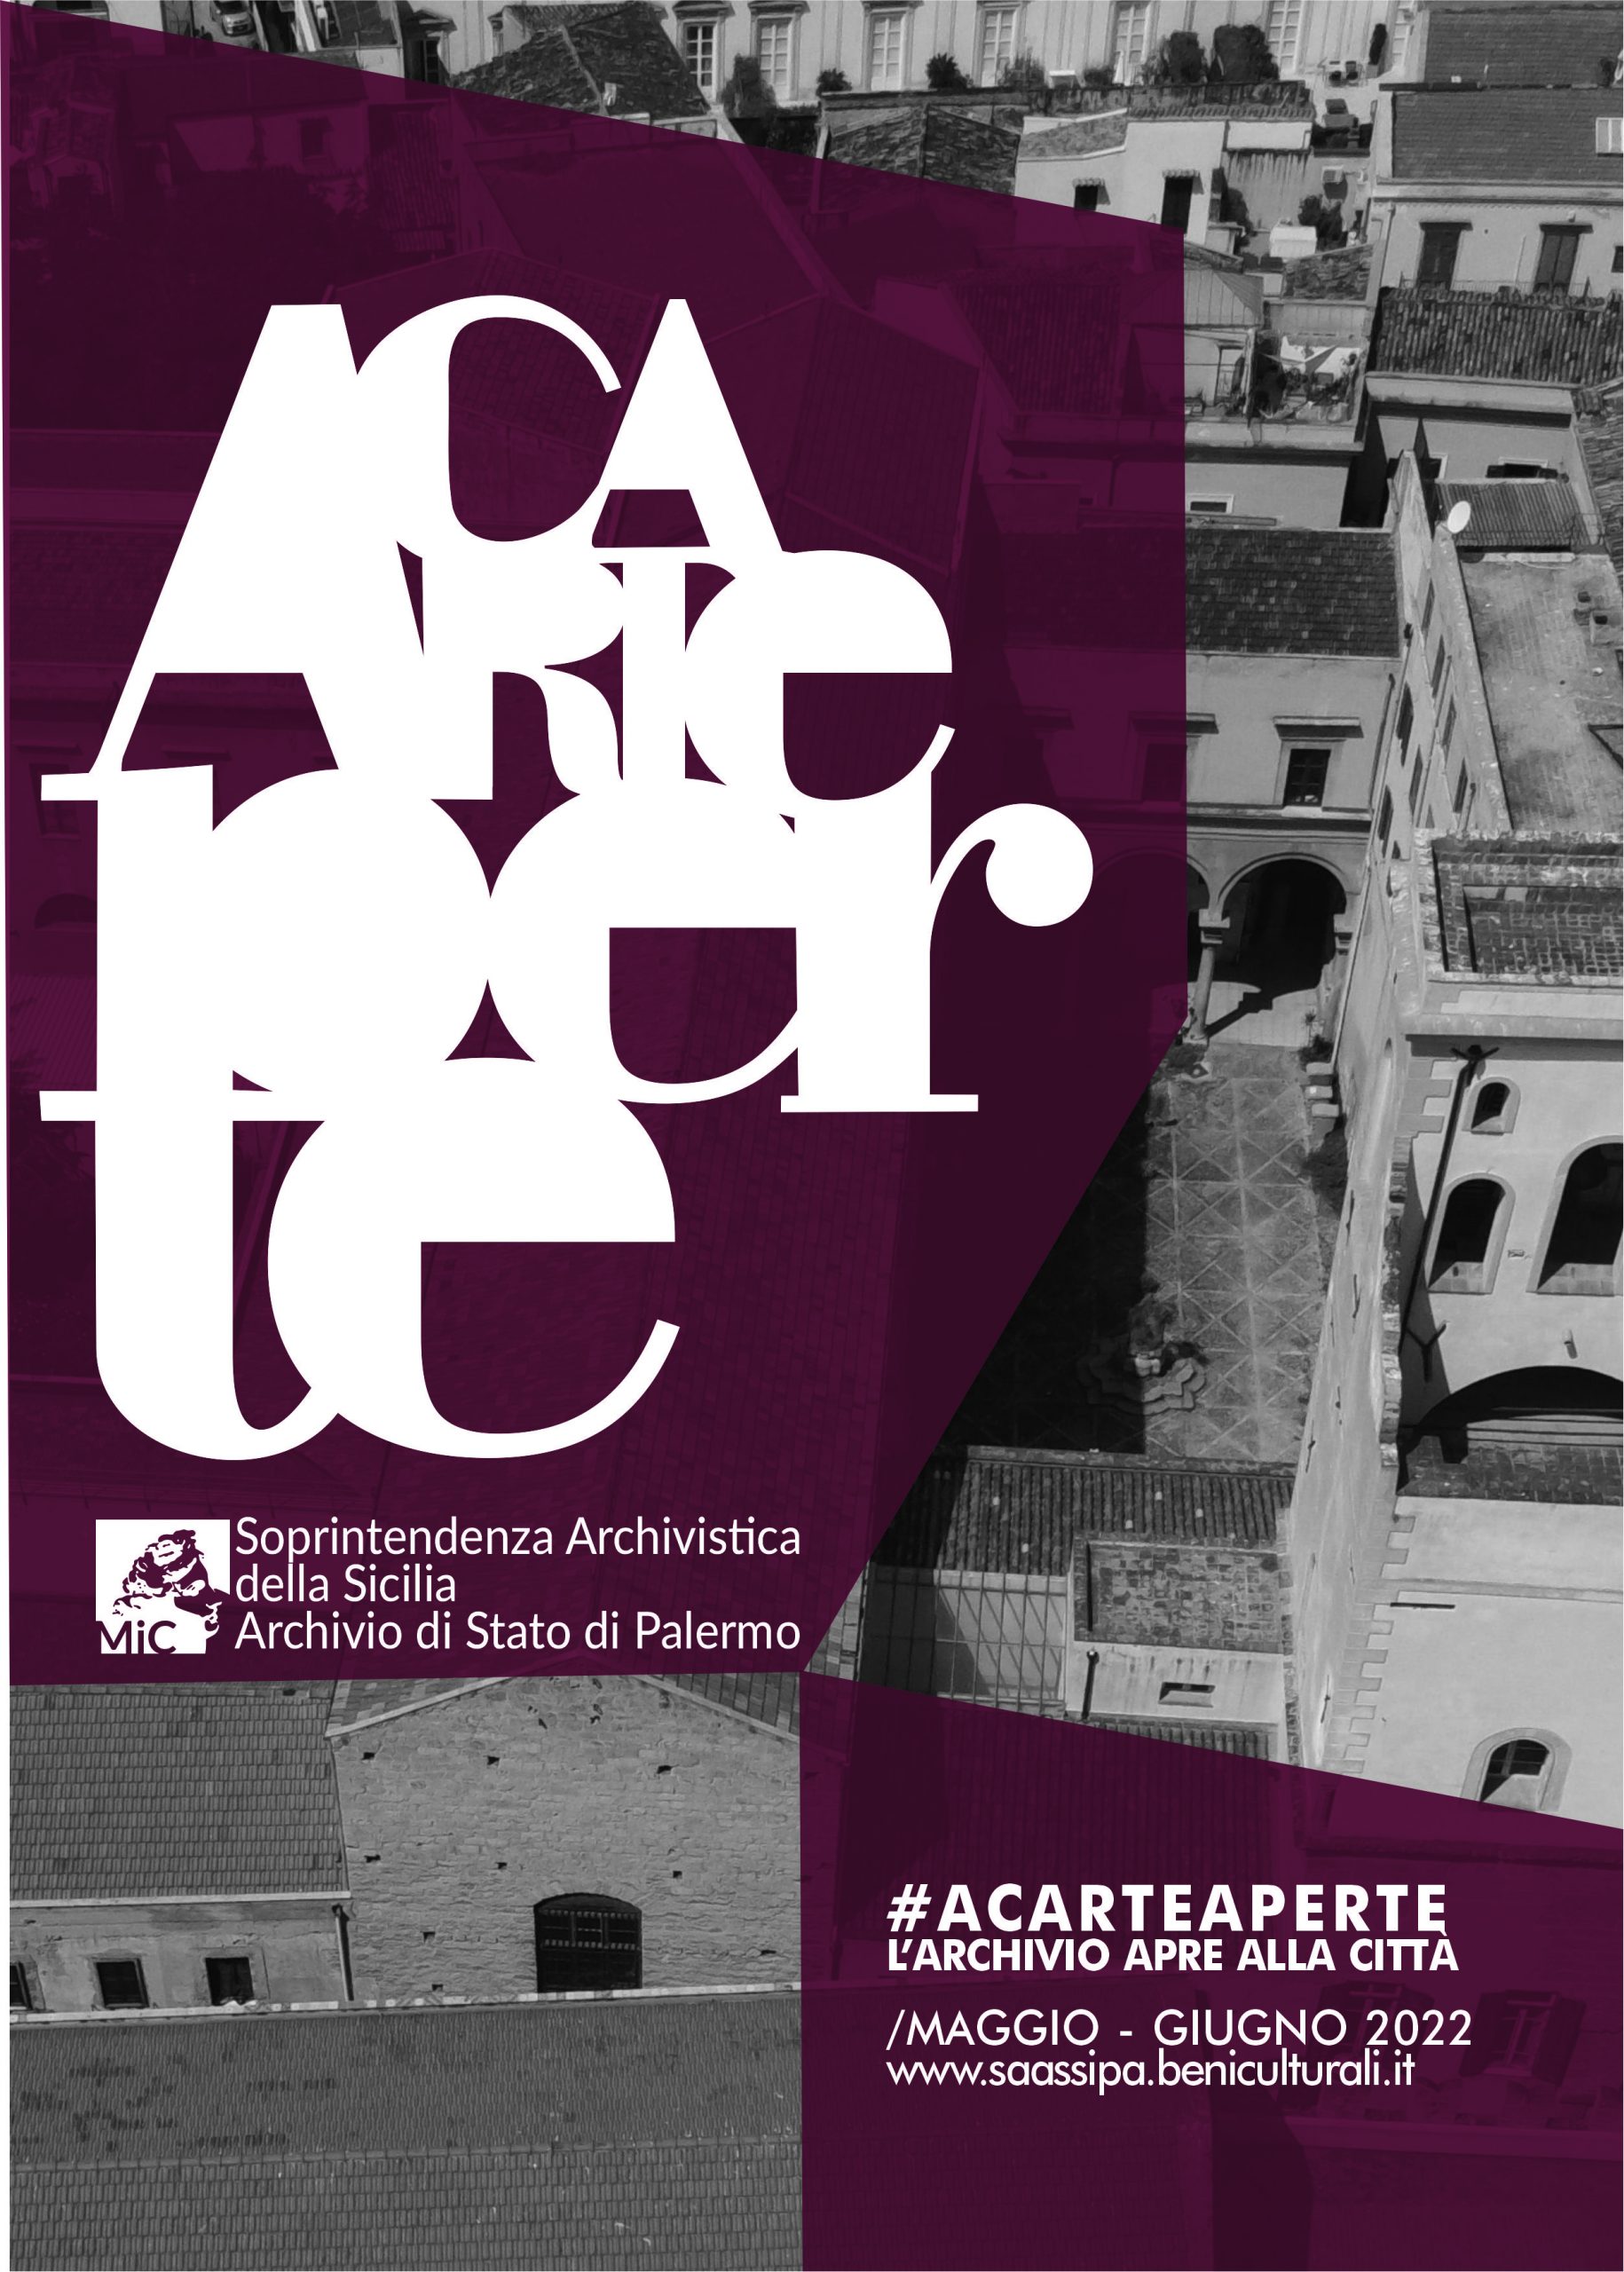 #acarteaperte - l'Archivio apre alla città - logo